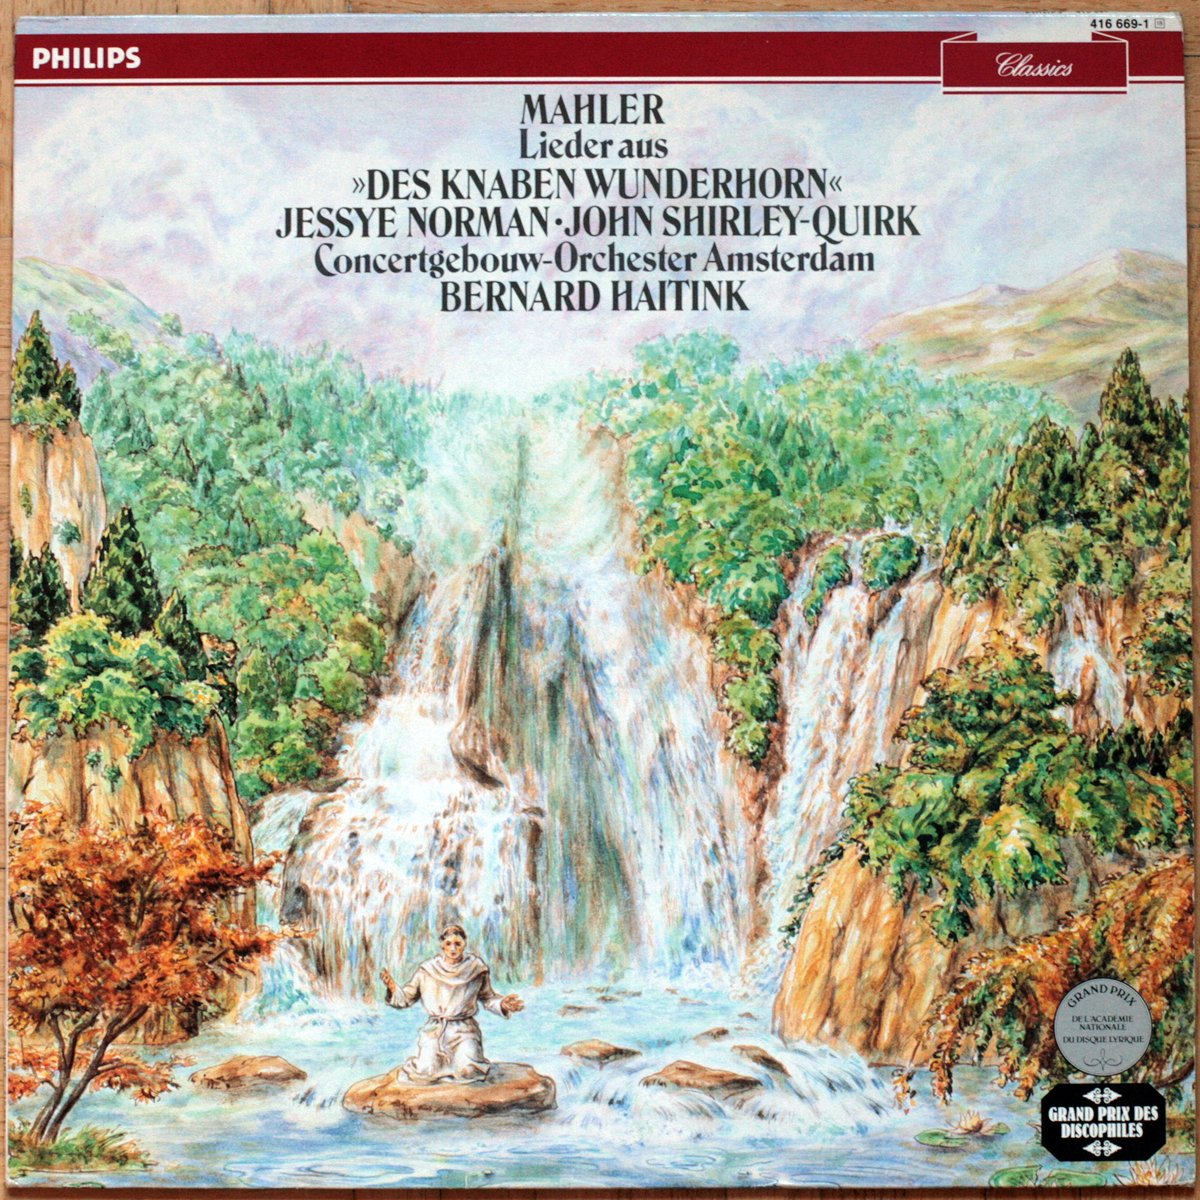 Mahler • Lieder aus "Des Knaben Wunderhorn" • Philips 416 669-1 • Jessye Norman • John Shirley-Quirk • Concertgebouw Orchester Amsterdam • Bernard Haitink